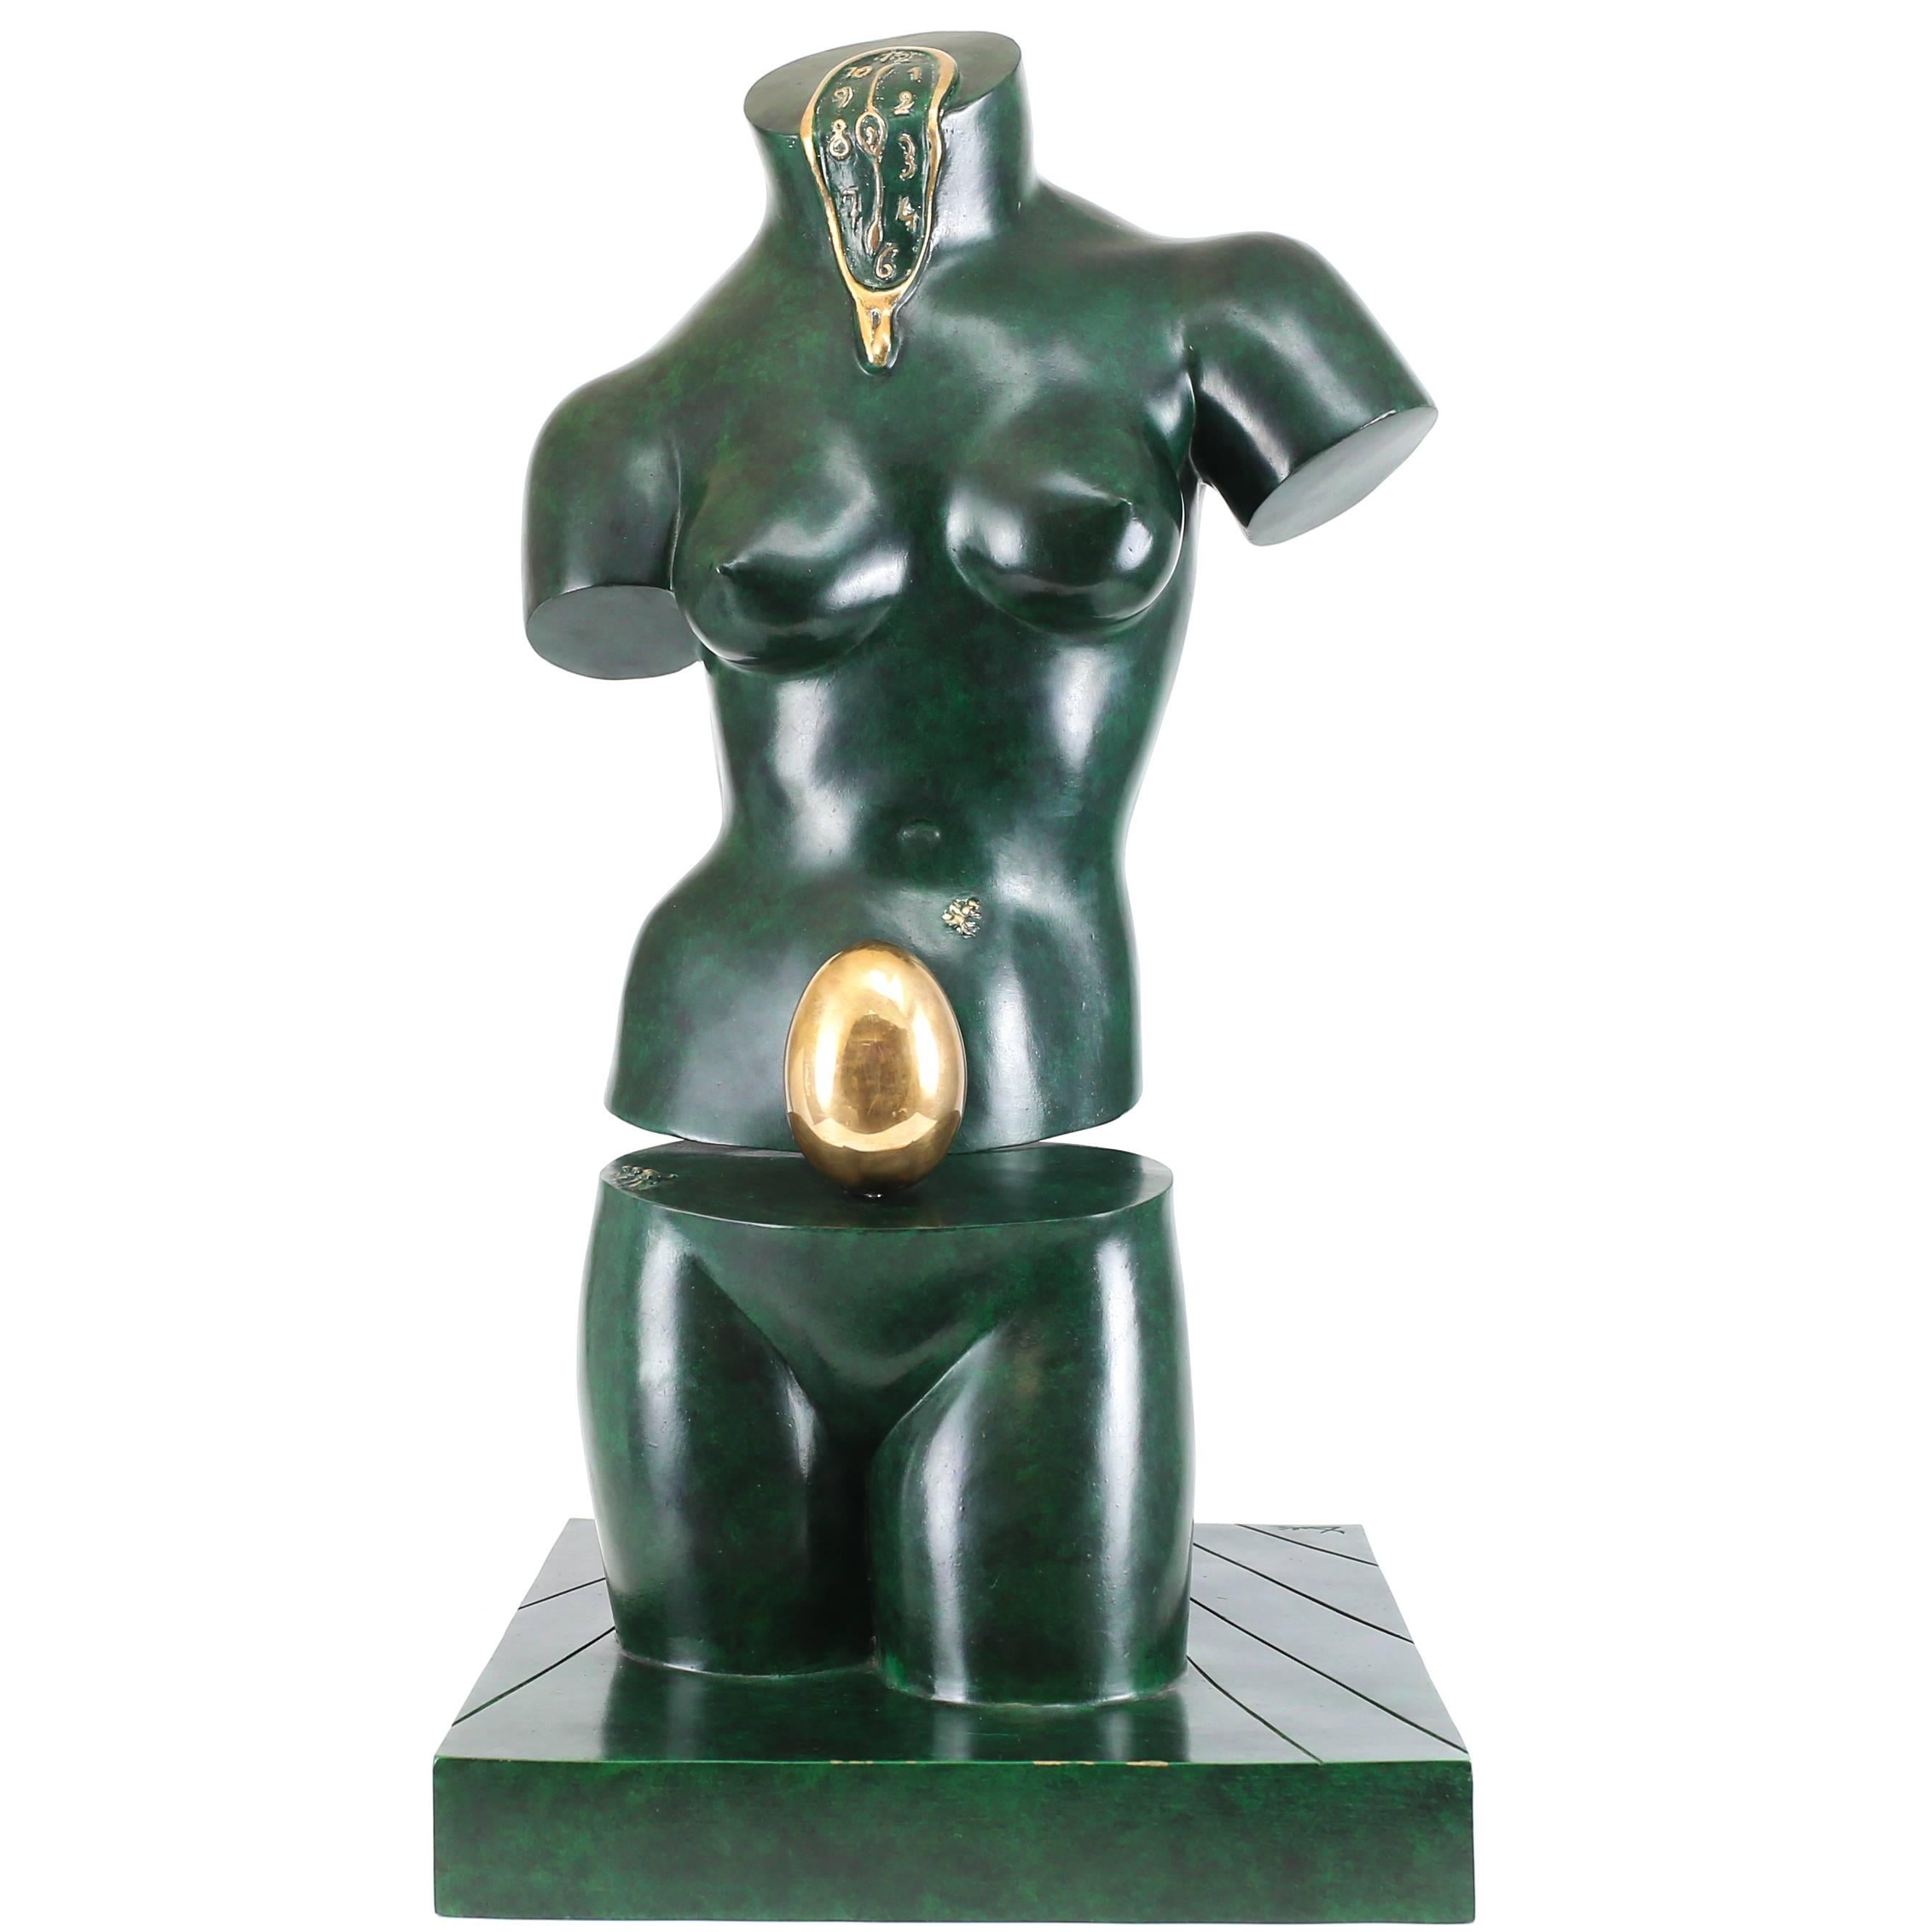 Limited Edition Bronze Sculpture by Salvador Dali "La Venus Spatiale", 1984